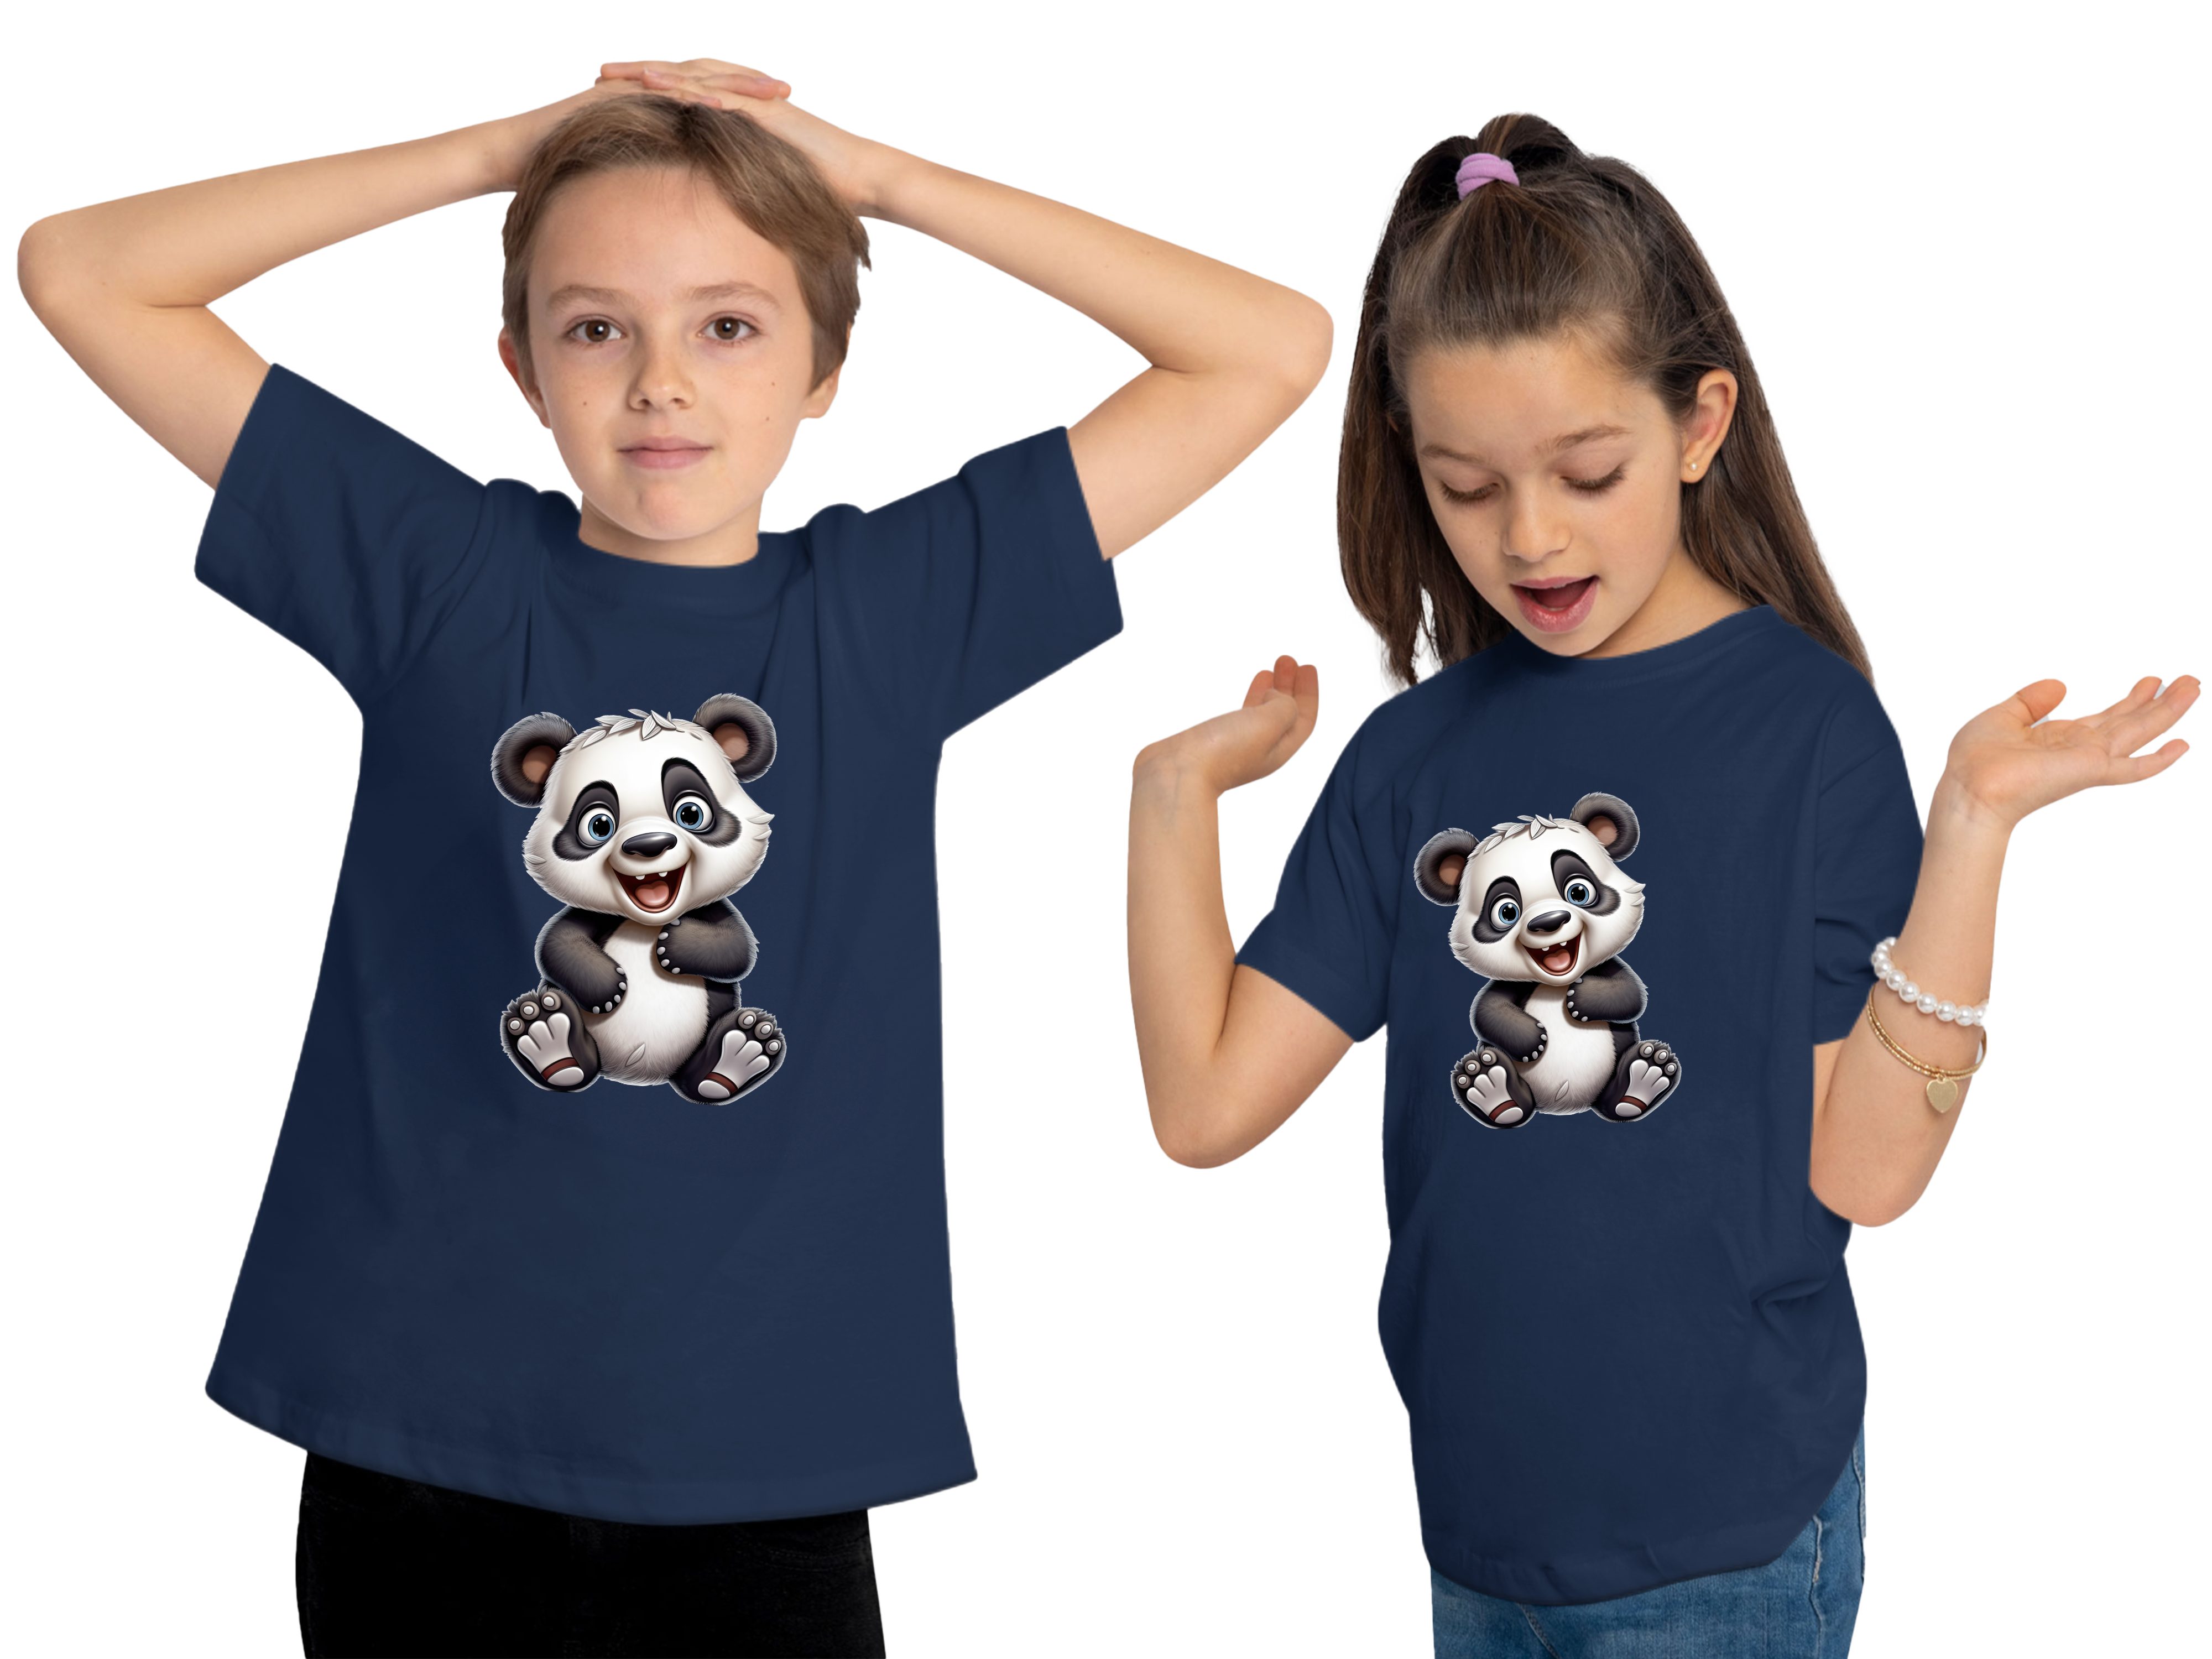 MyDesign24 T-Shirt Kinder Wildtier Print Baby blau Baumwollshirt mit navy - Shirt bedruckt Panda i277 Bär Aufdruck